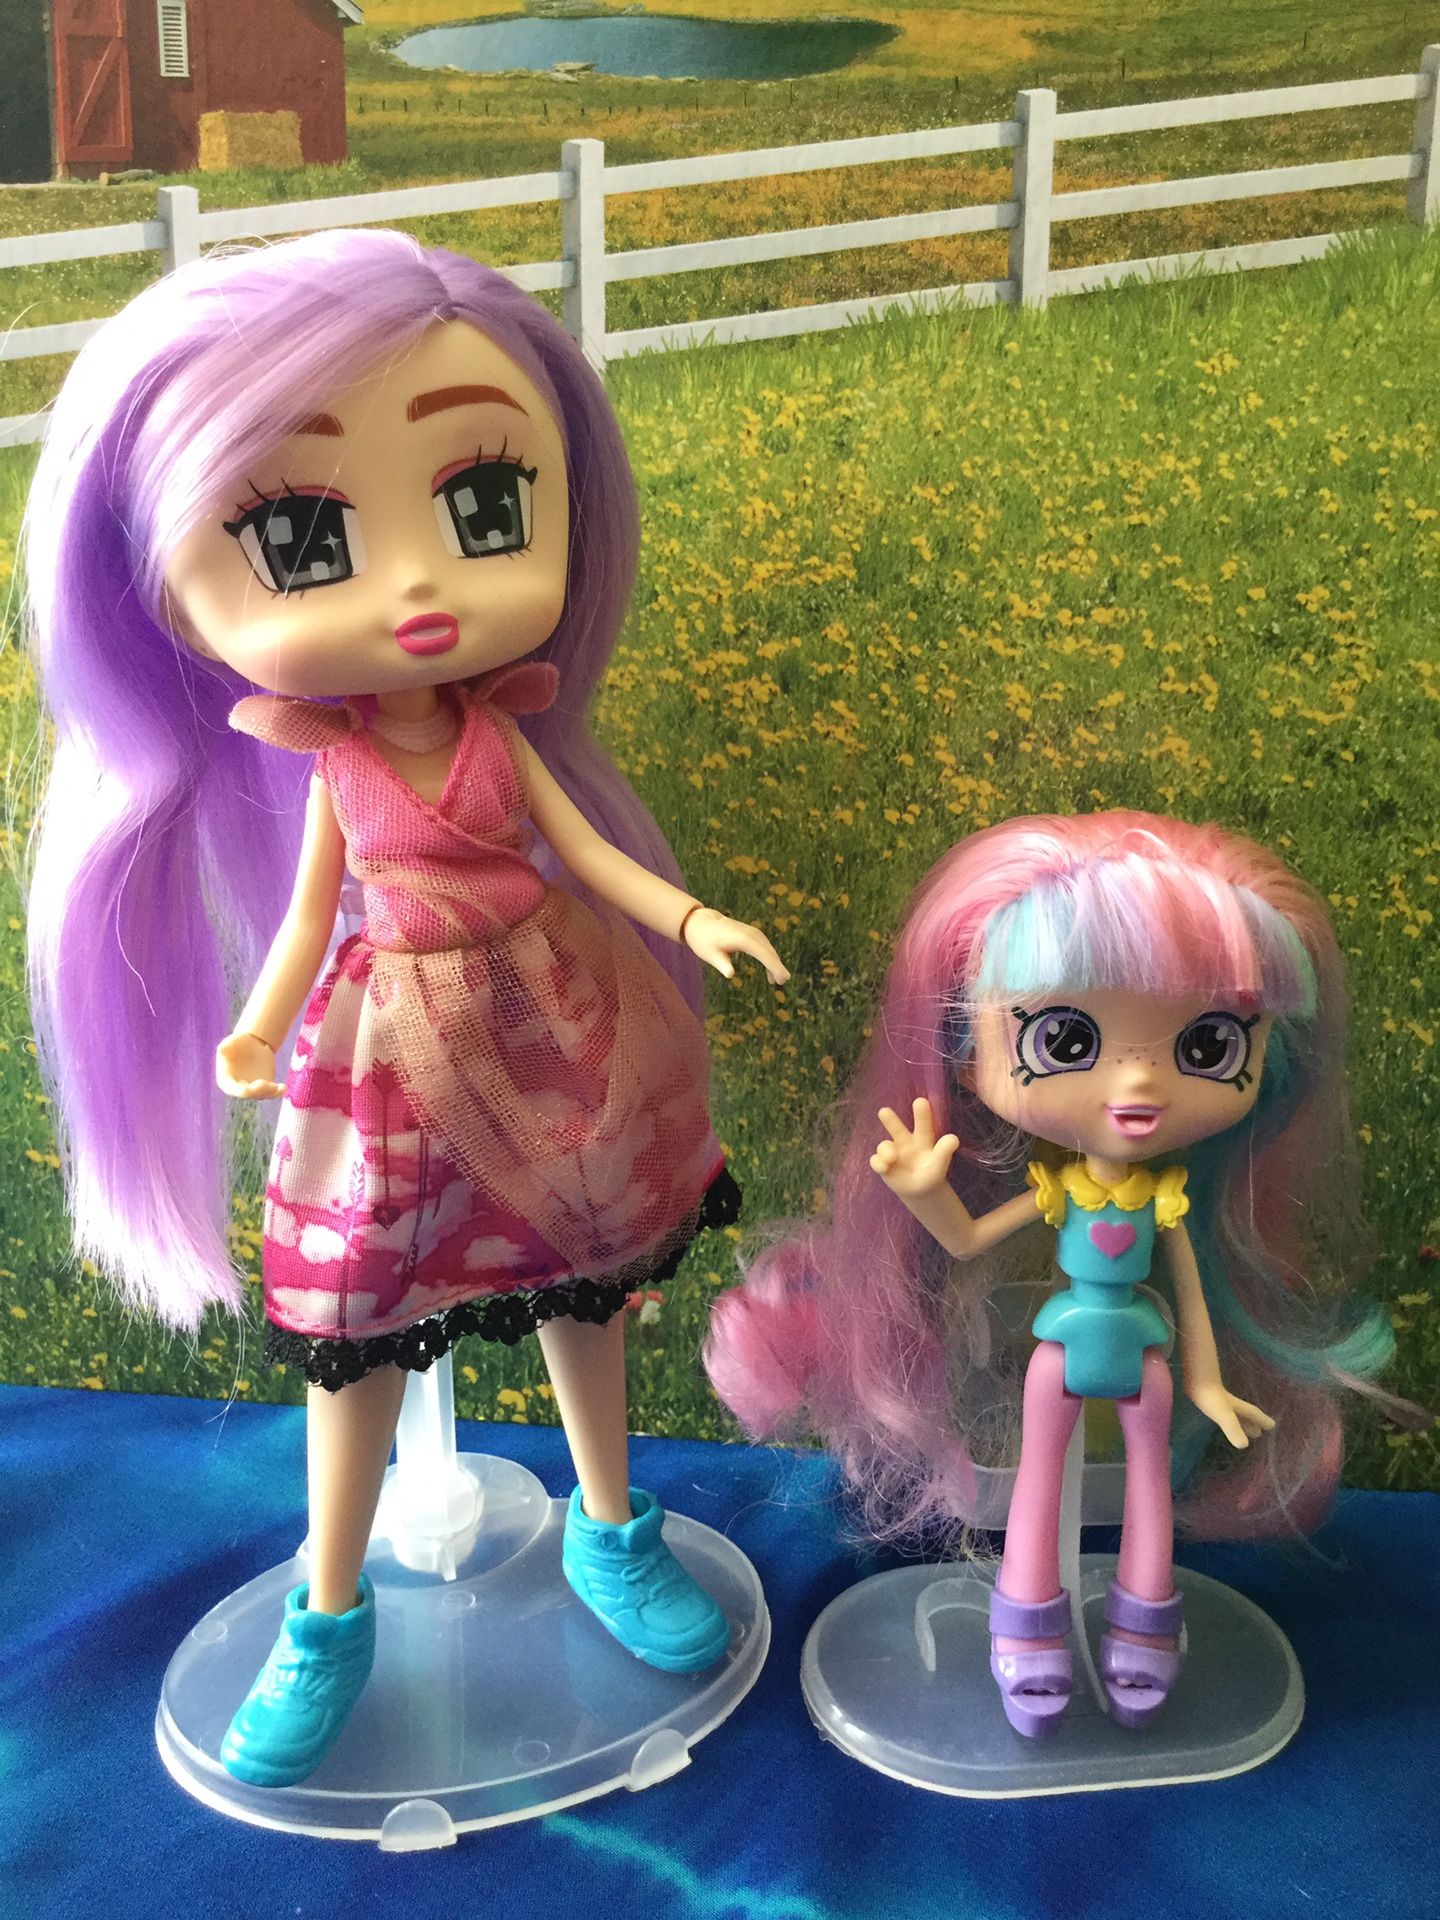 1 Boxy Girl Doll & 1 Shopkins Shoppie Doll